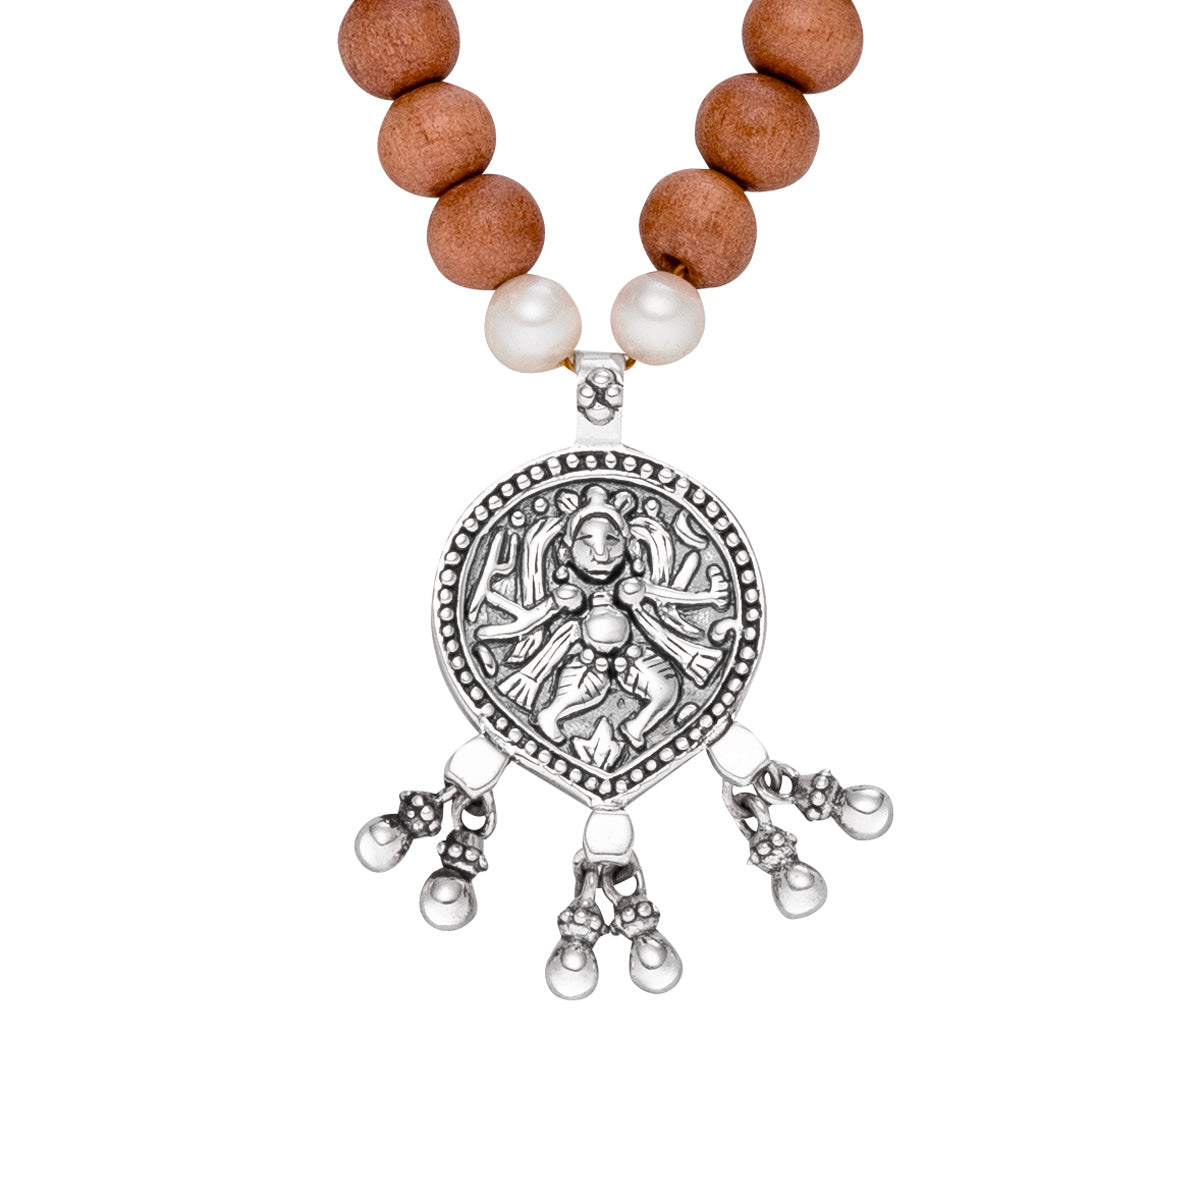 Shiva Kette aus 925 Sterling Silber mit Sandelholz Perlen.